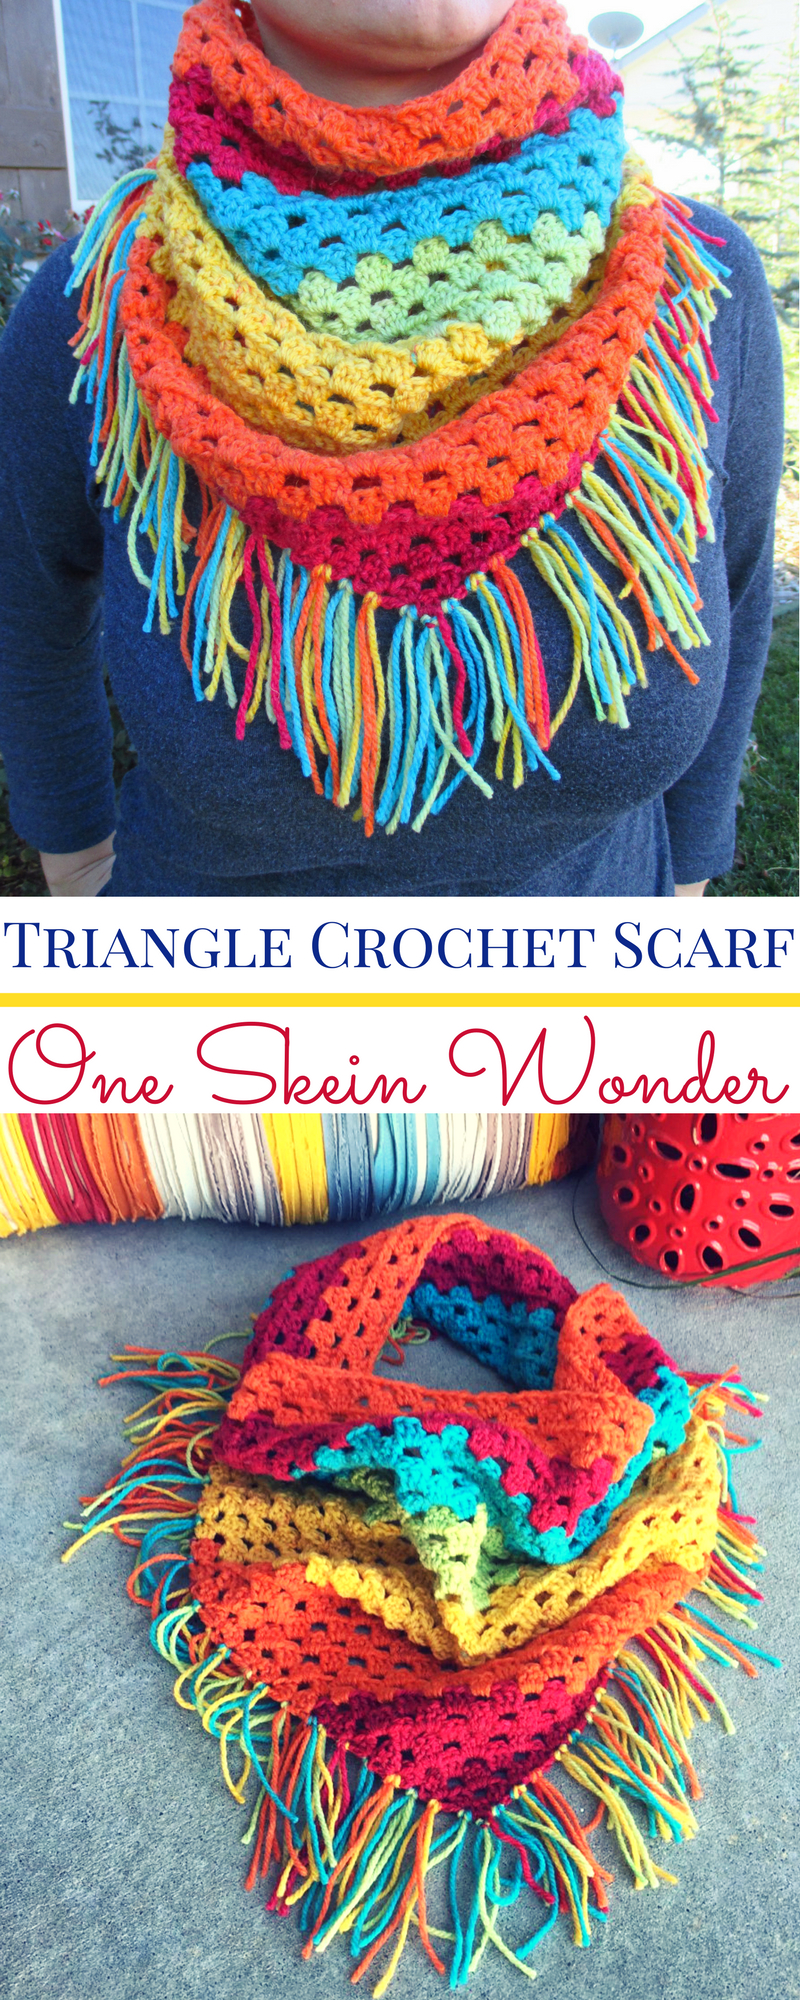 Caron Crochet Patterns Triangle Crochet Scarf With Fringe Using Caron Cake Yarn